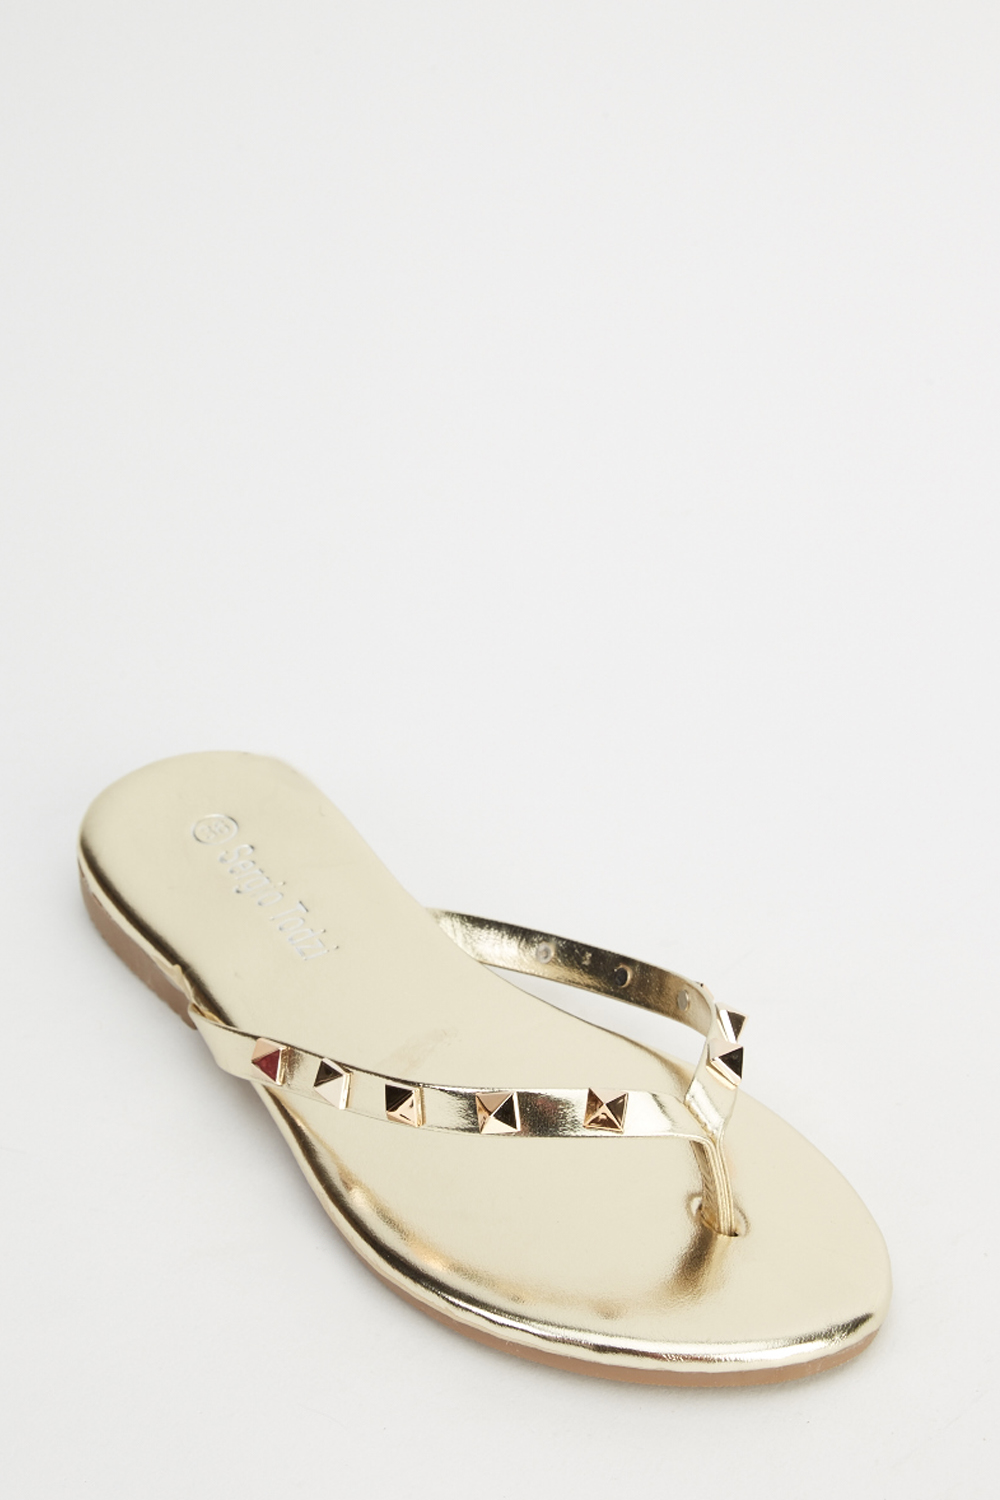 Studded Flip Flops - Light Gold - Just $6